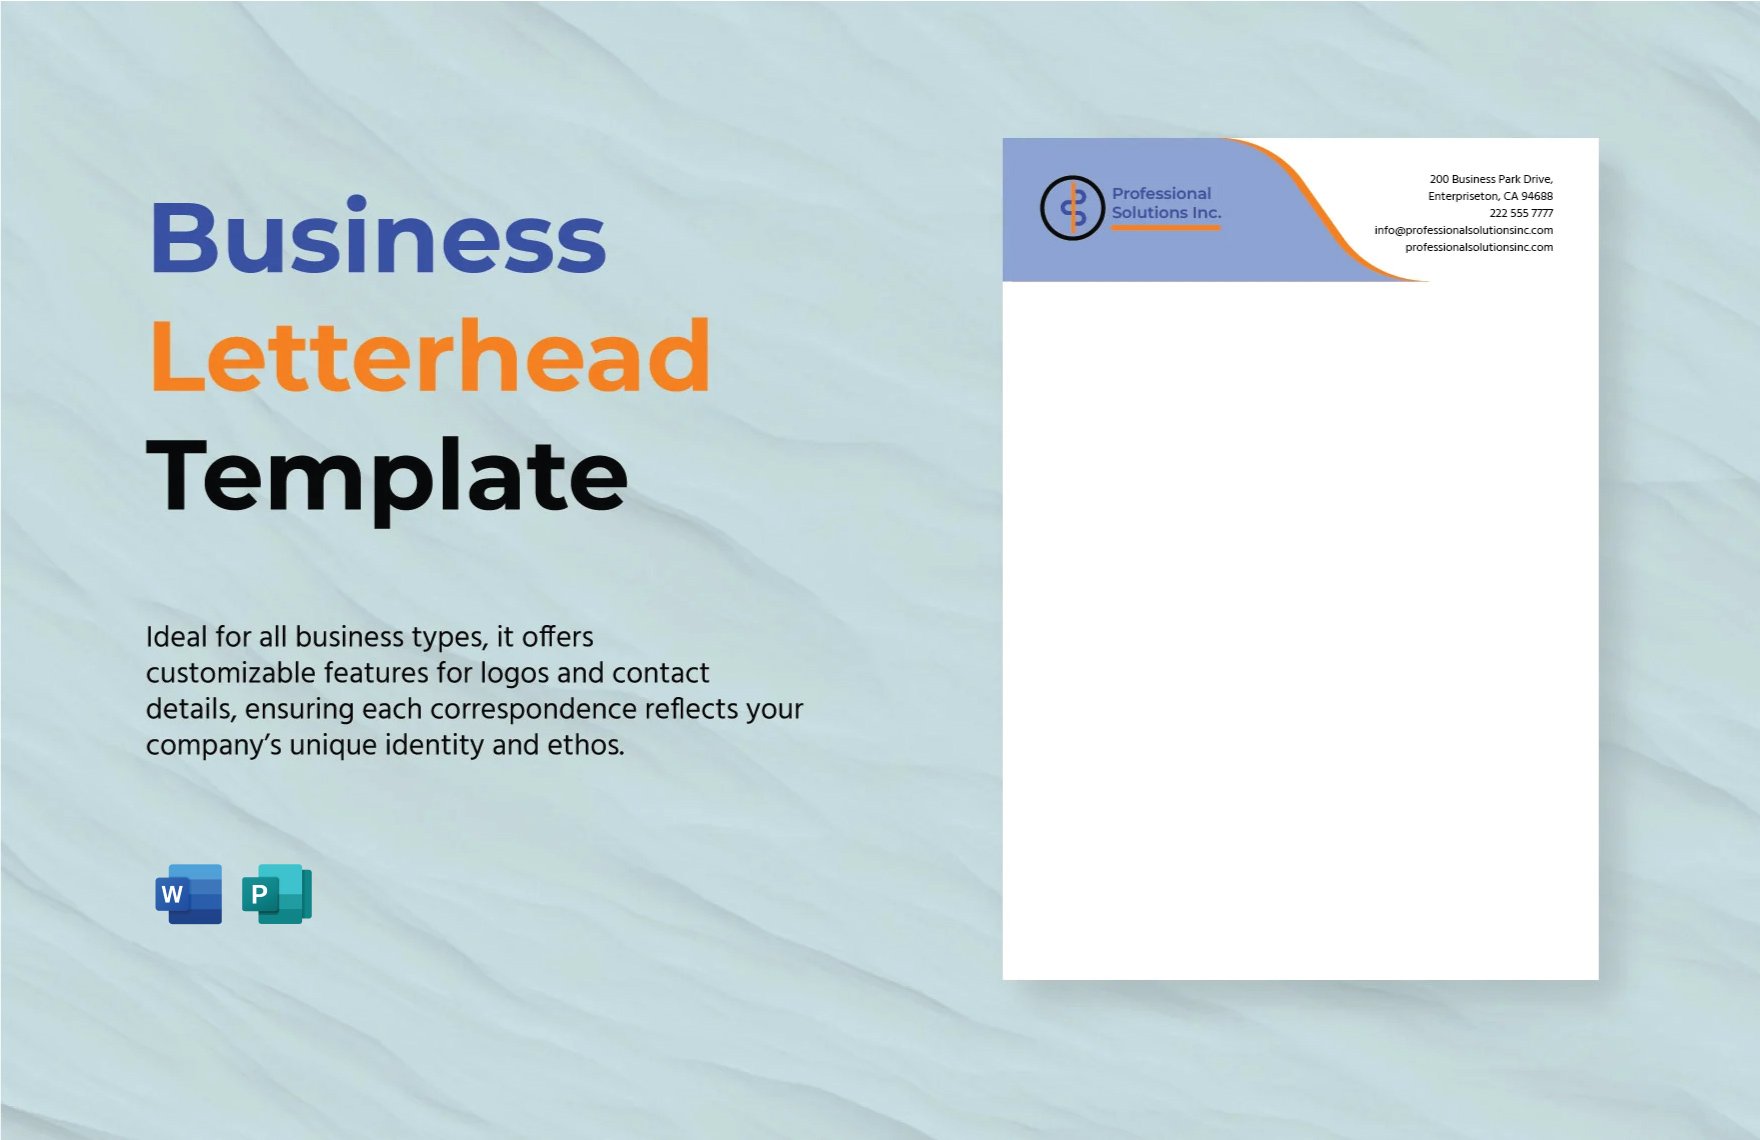 Business Letterhead Template